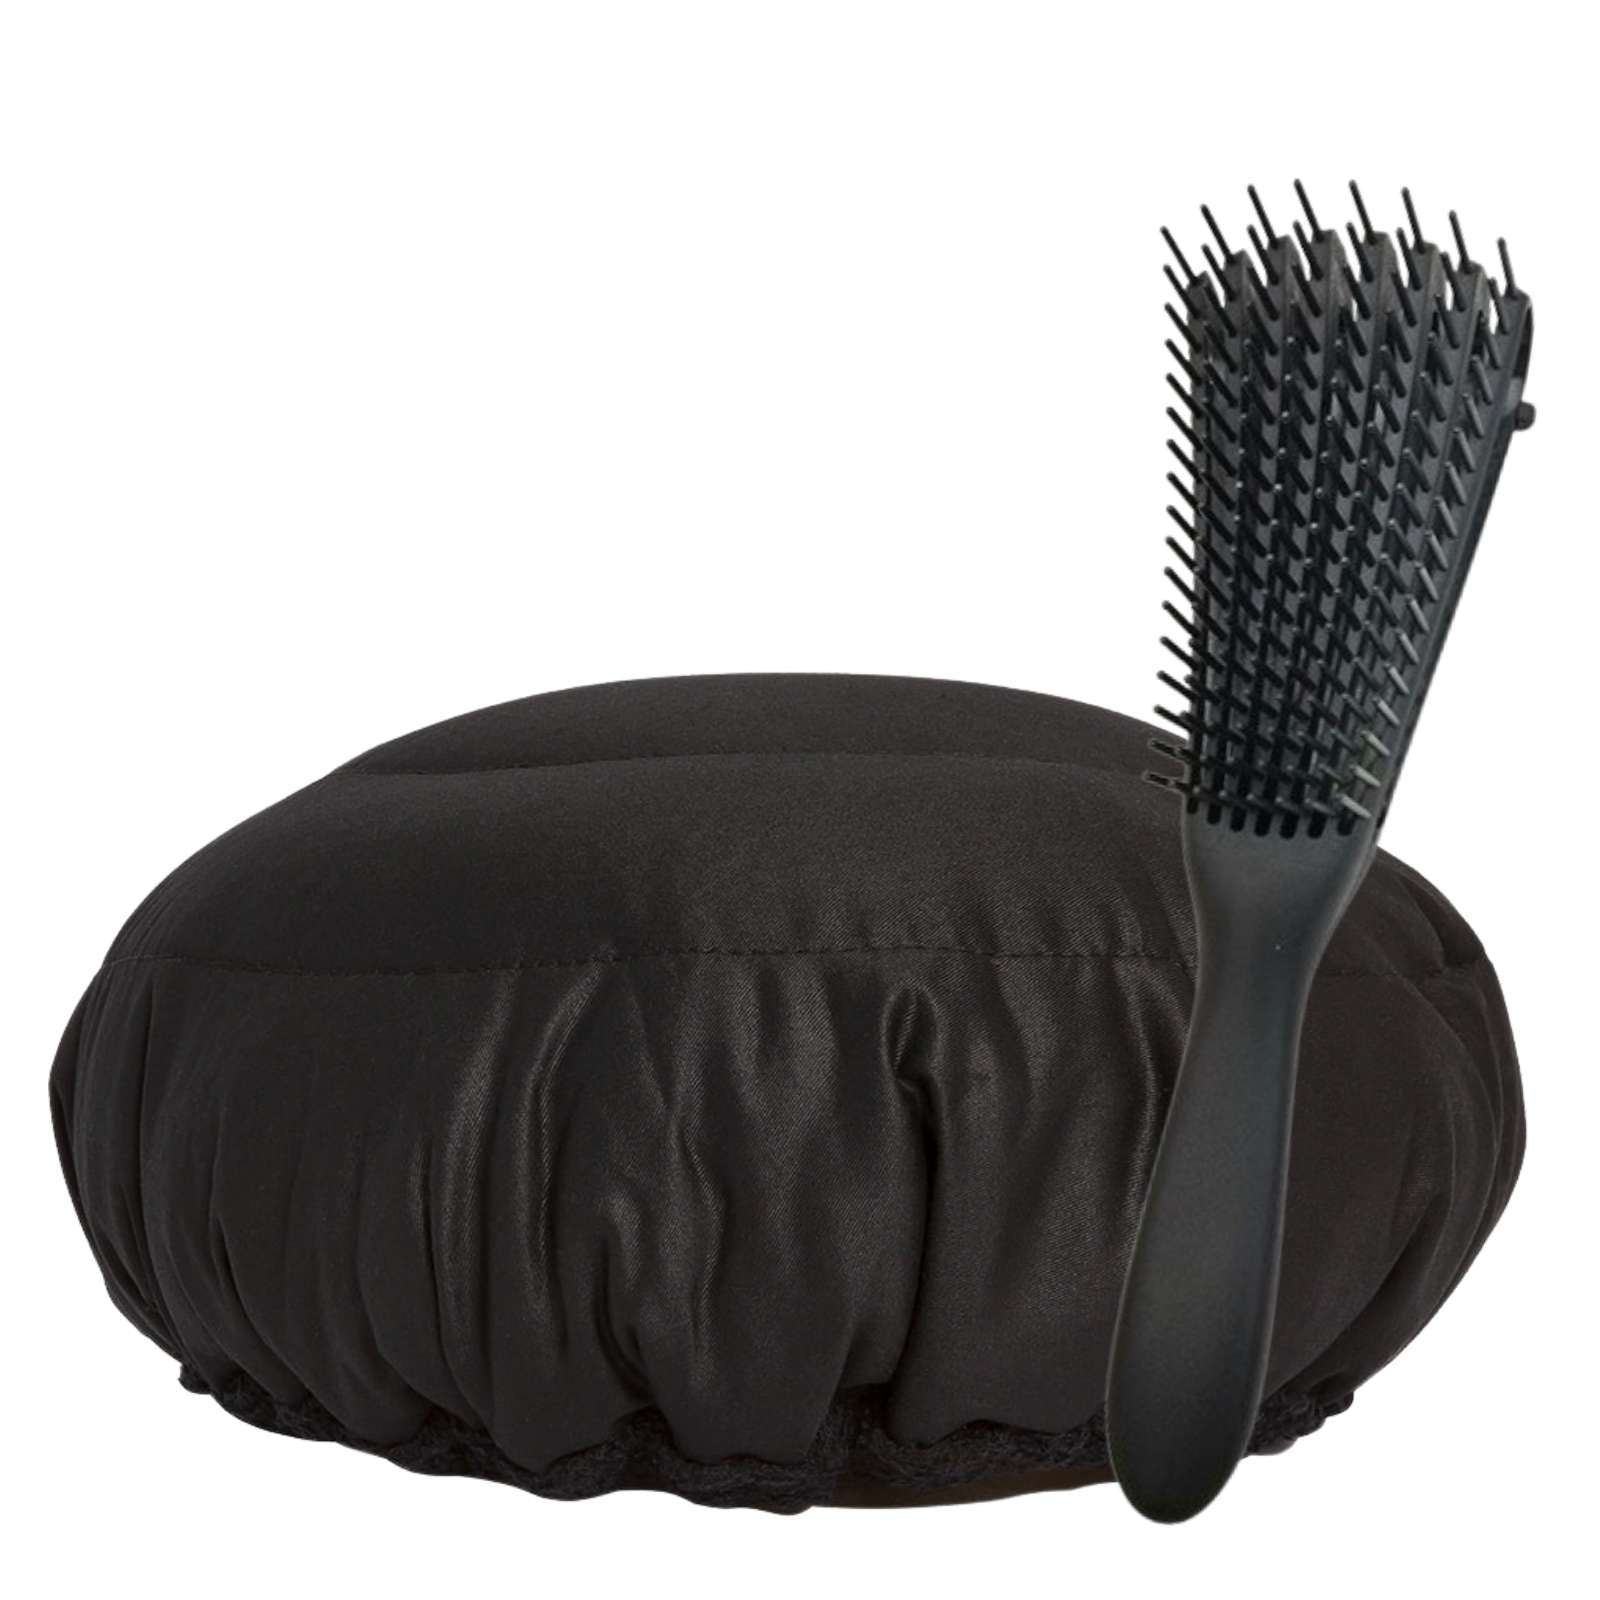 Lava Cap microwavable heat cap UK stock, with detangling hairbrush in Black Onyx